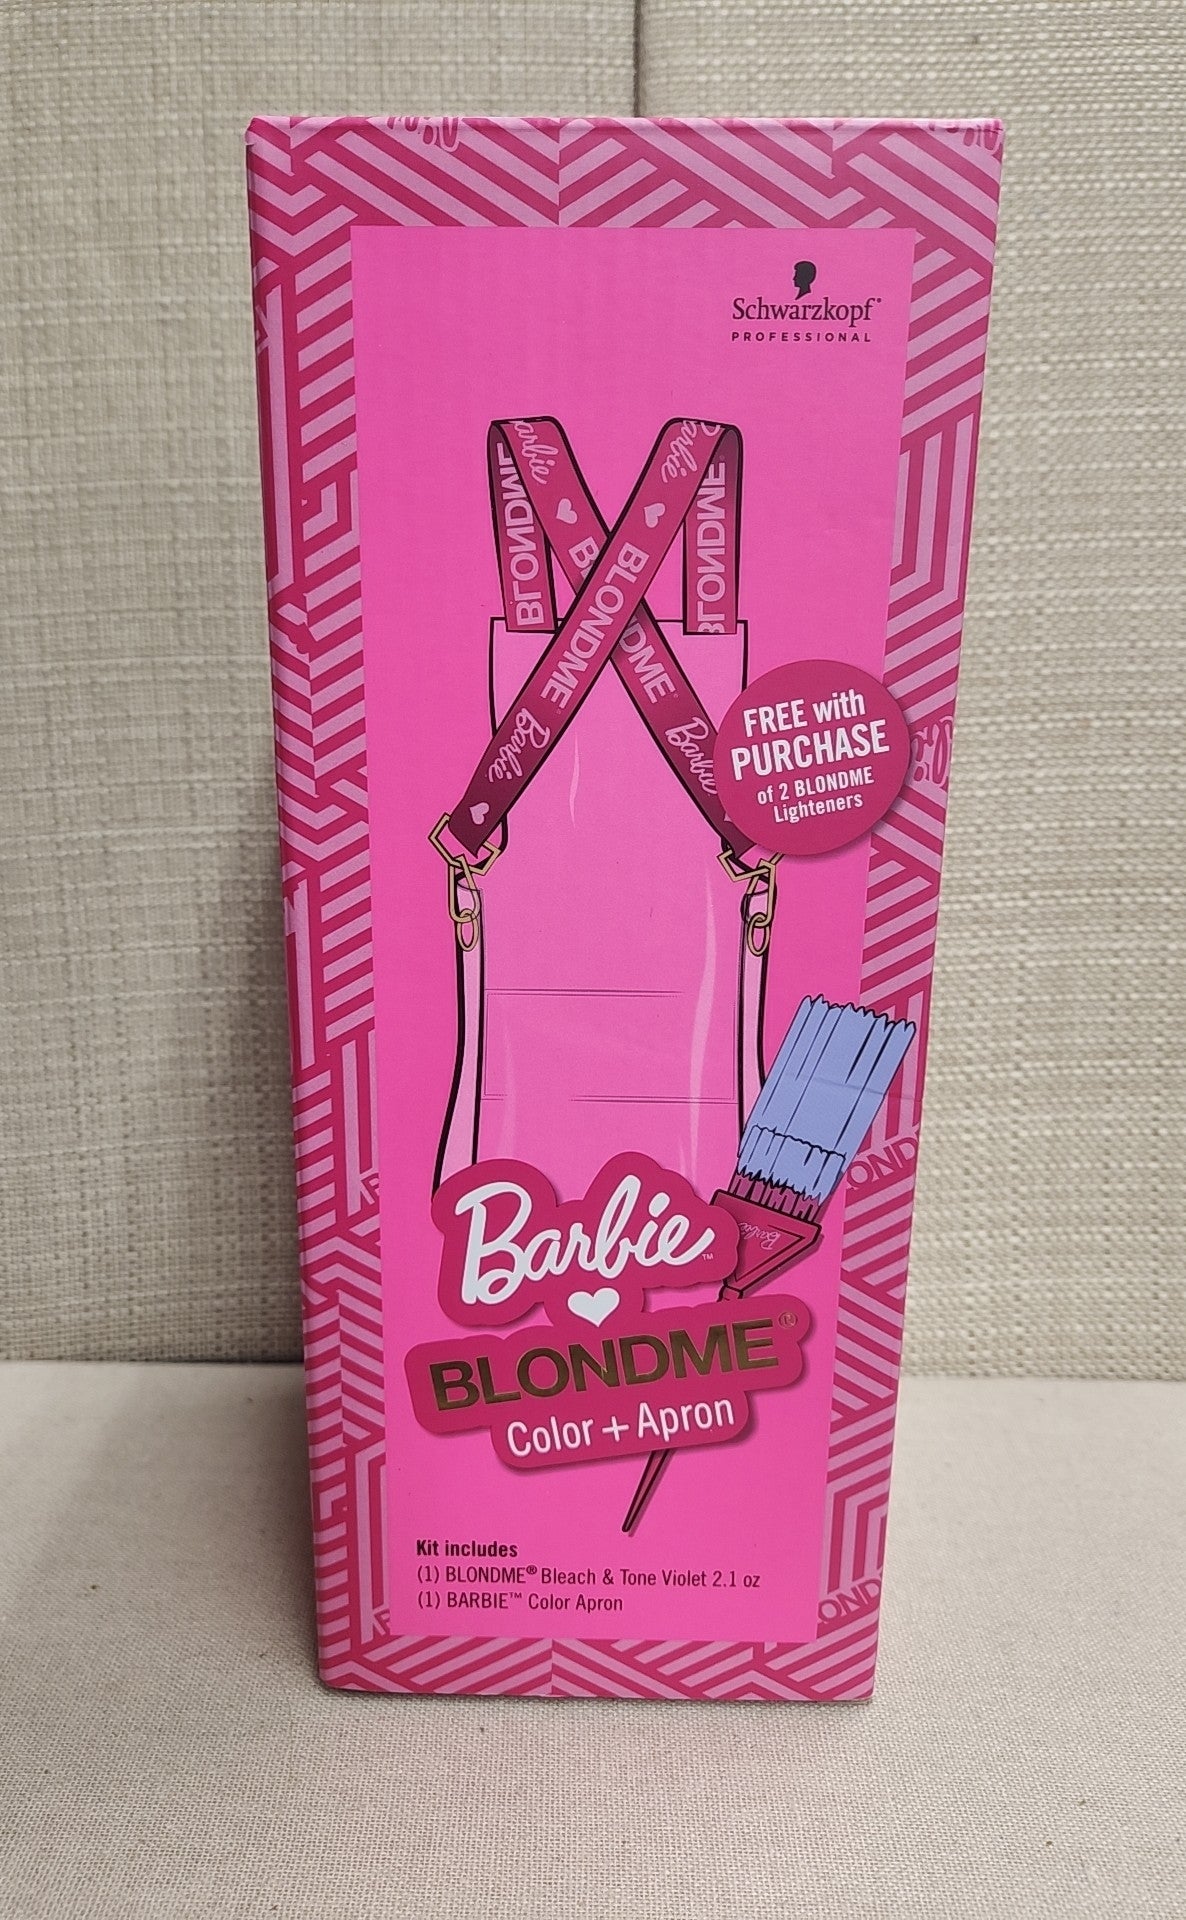 Barbie Blondme Schwarzkopf Color & Apron Kit in Box